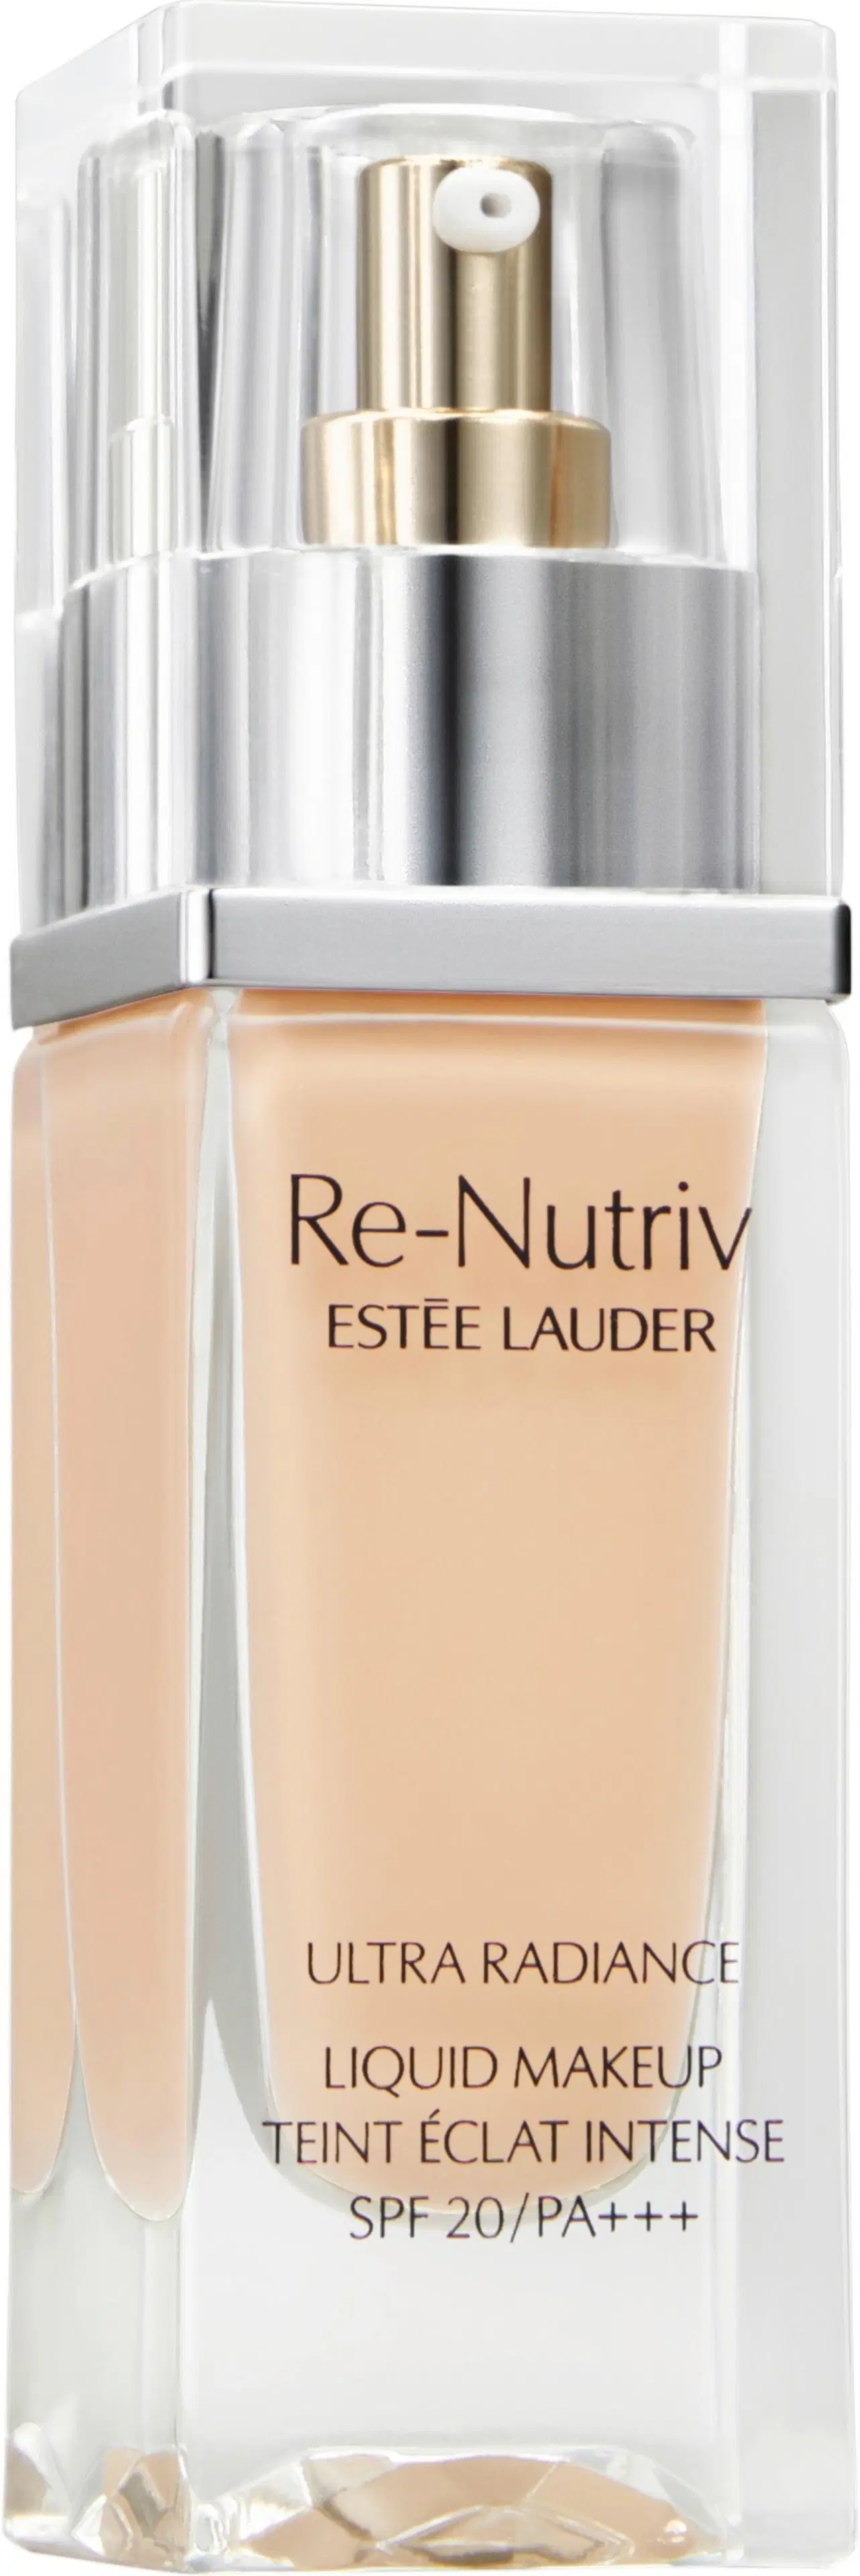 Estée Lauder Re-Nutriv Ultra Radiance Liquid Make-Up SPF 20 meikkivoide 30 ml